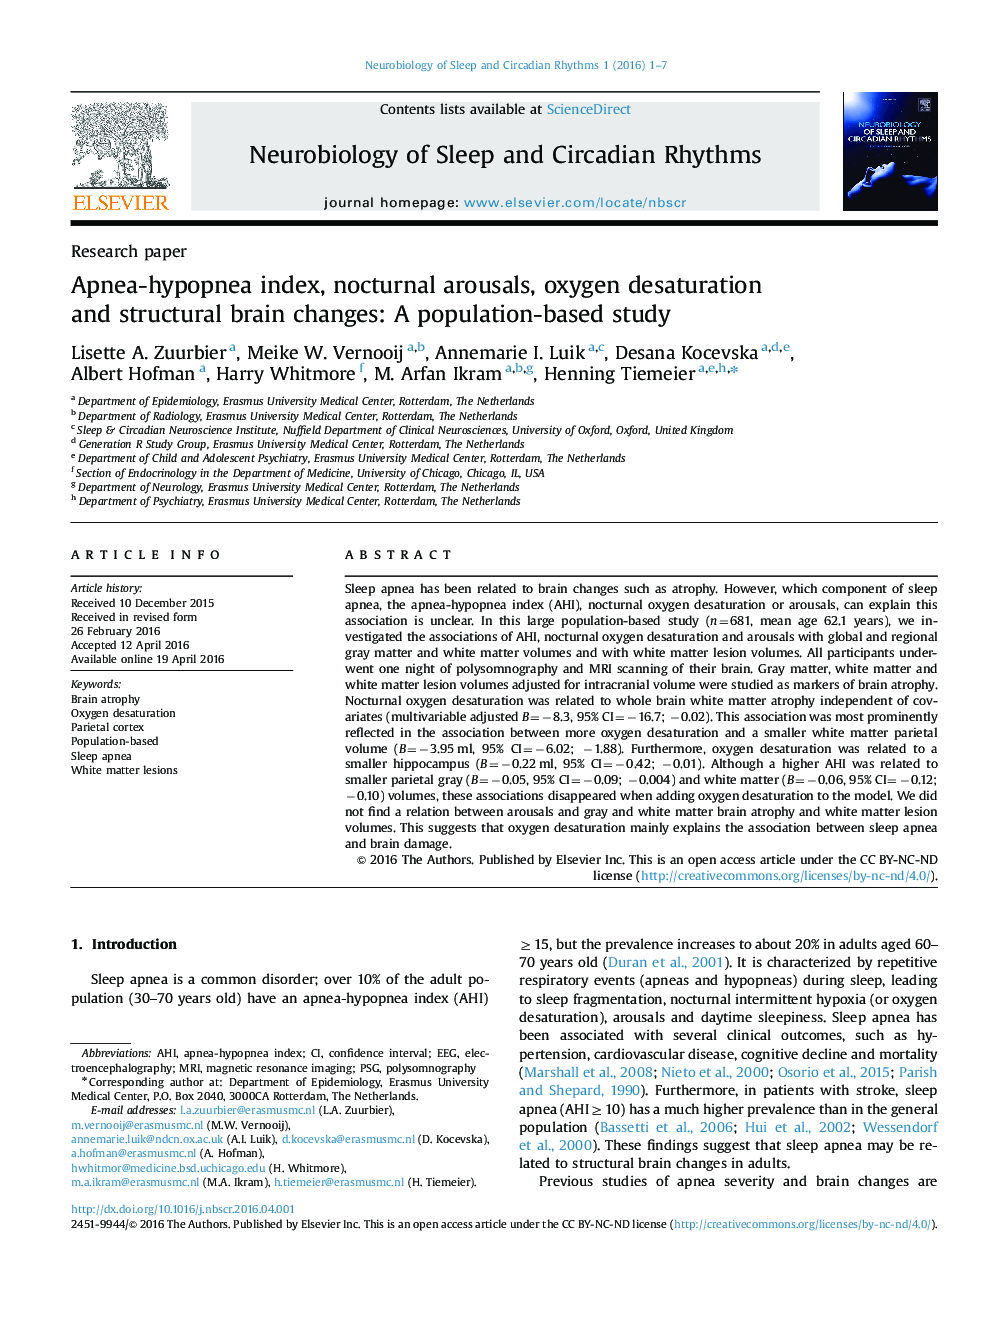 Apnea-hypopnea index, nocturnal arousals, oxygen desaturation and structural brain changes: A population-based study